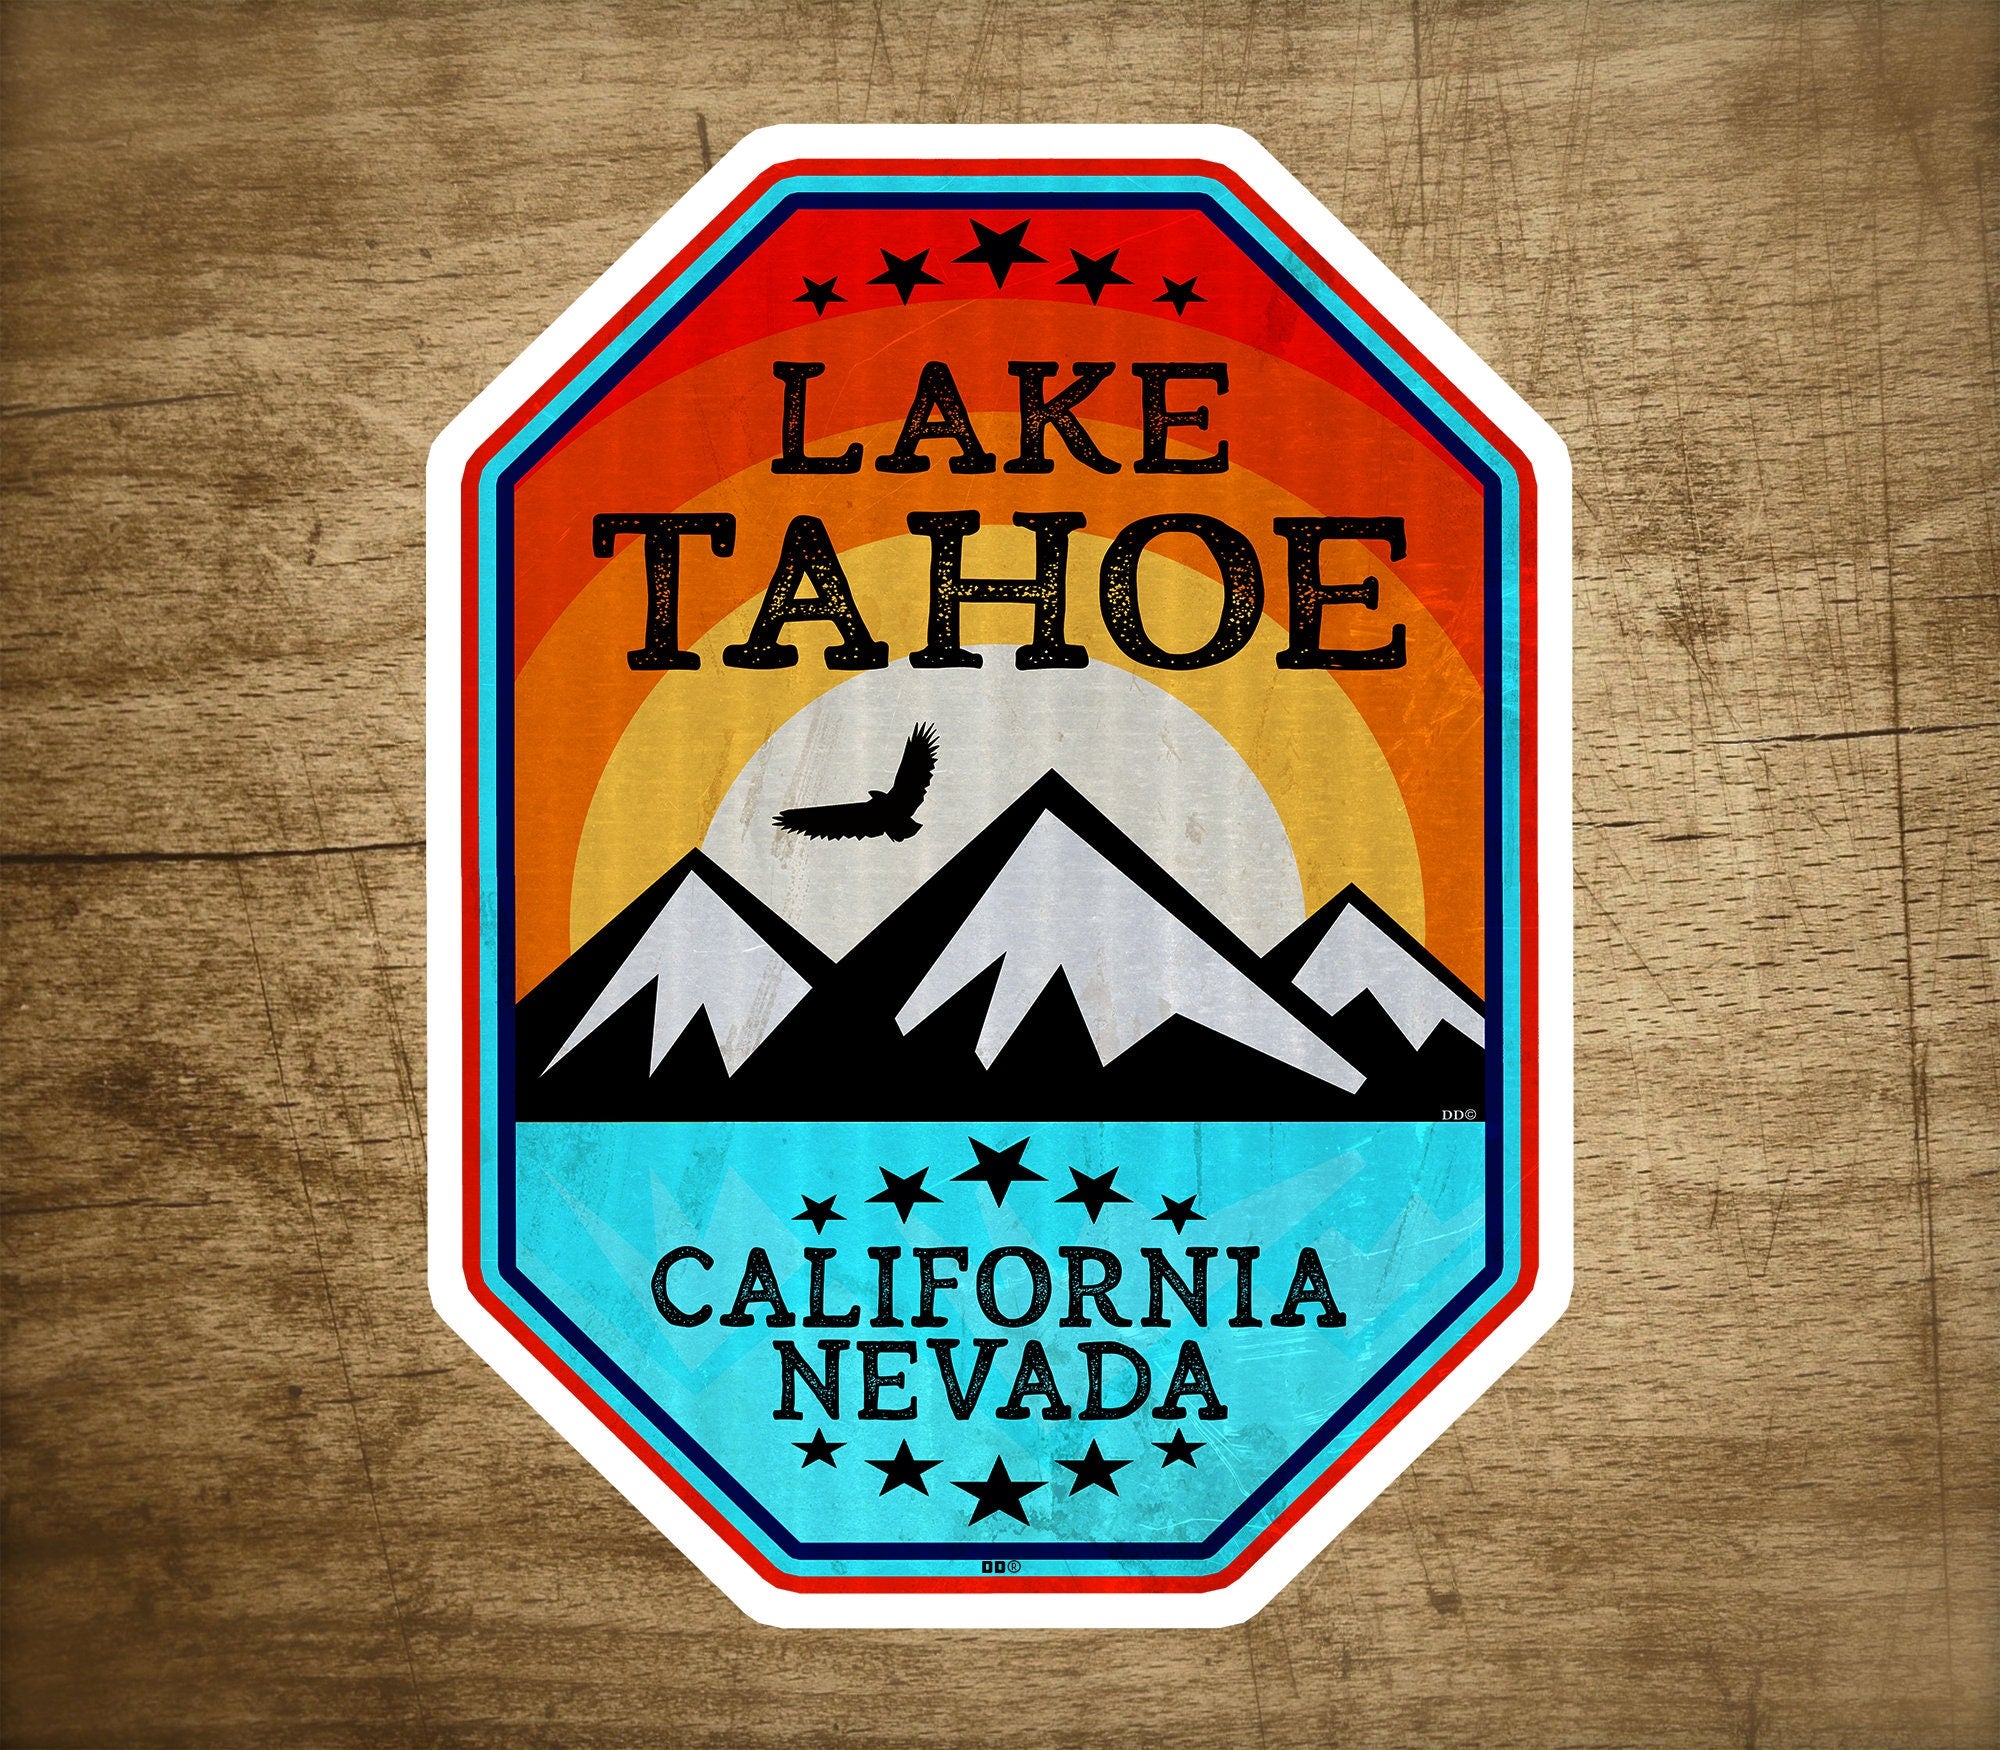 Lake Tahoe California Nevada Decal Sticker 2.75" X 3.75" Skiing Lakes Boating Glossy